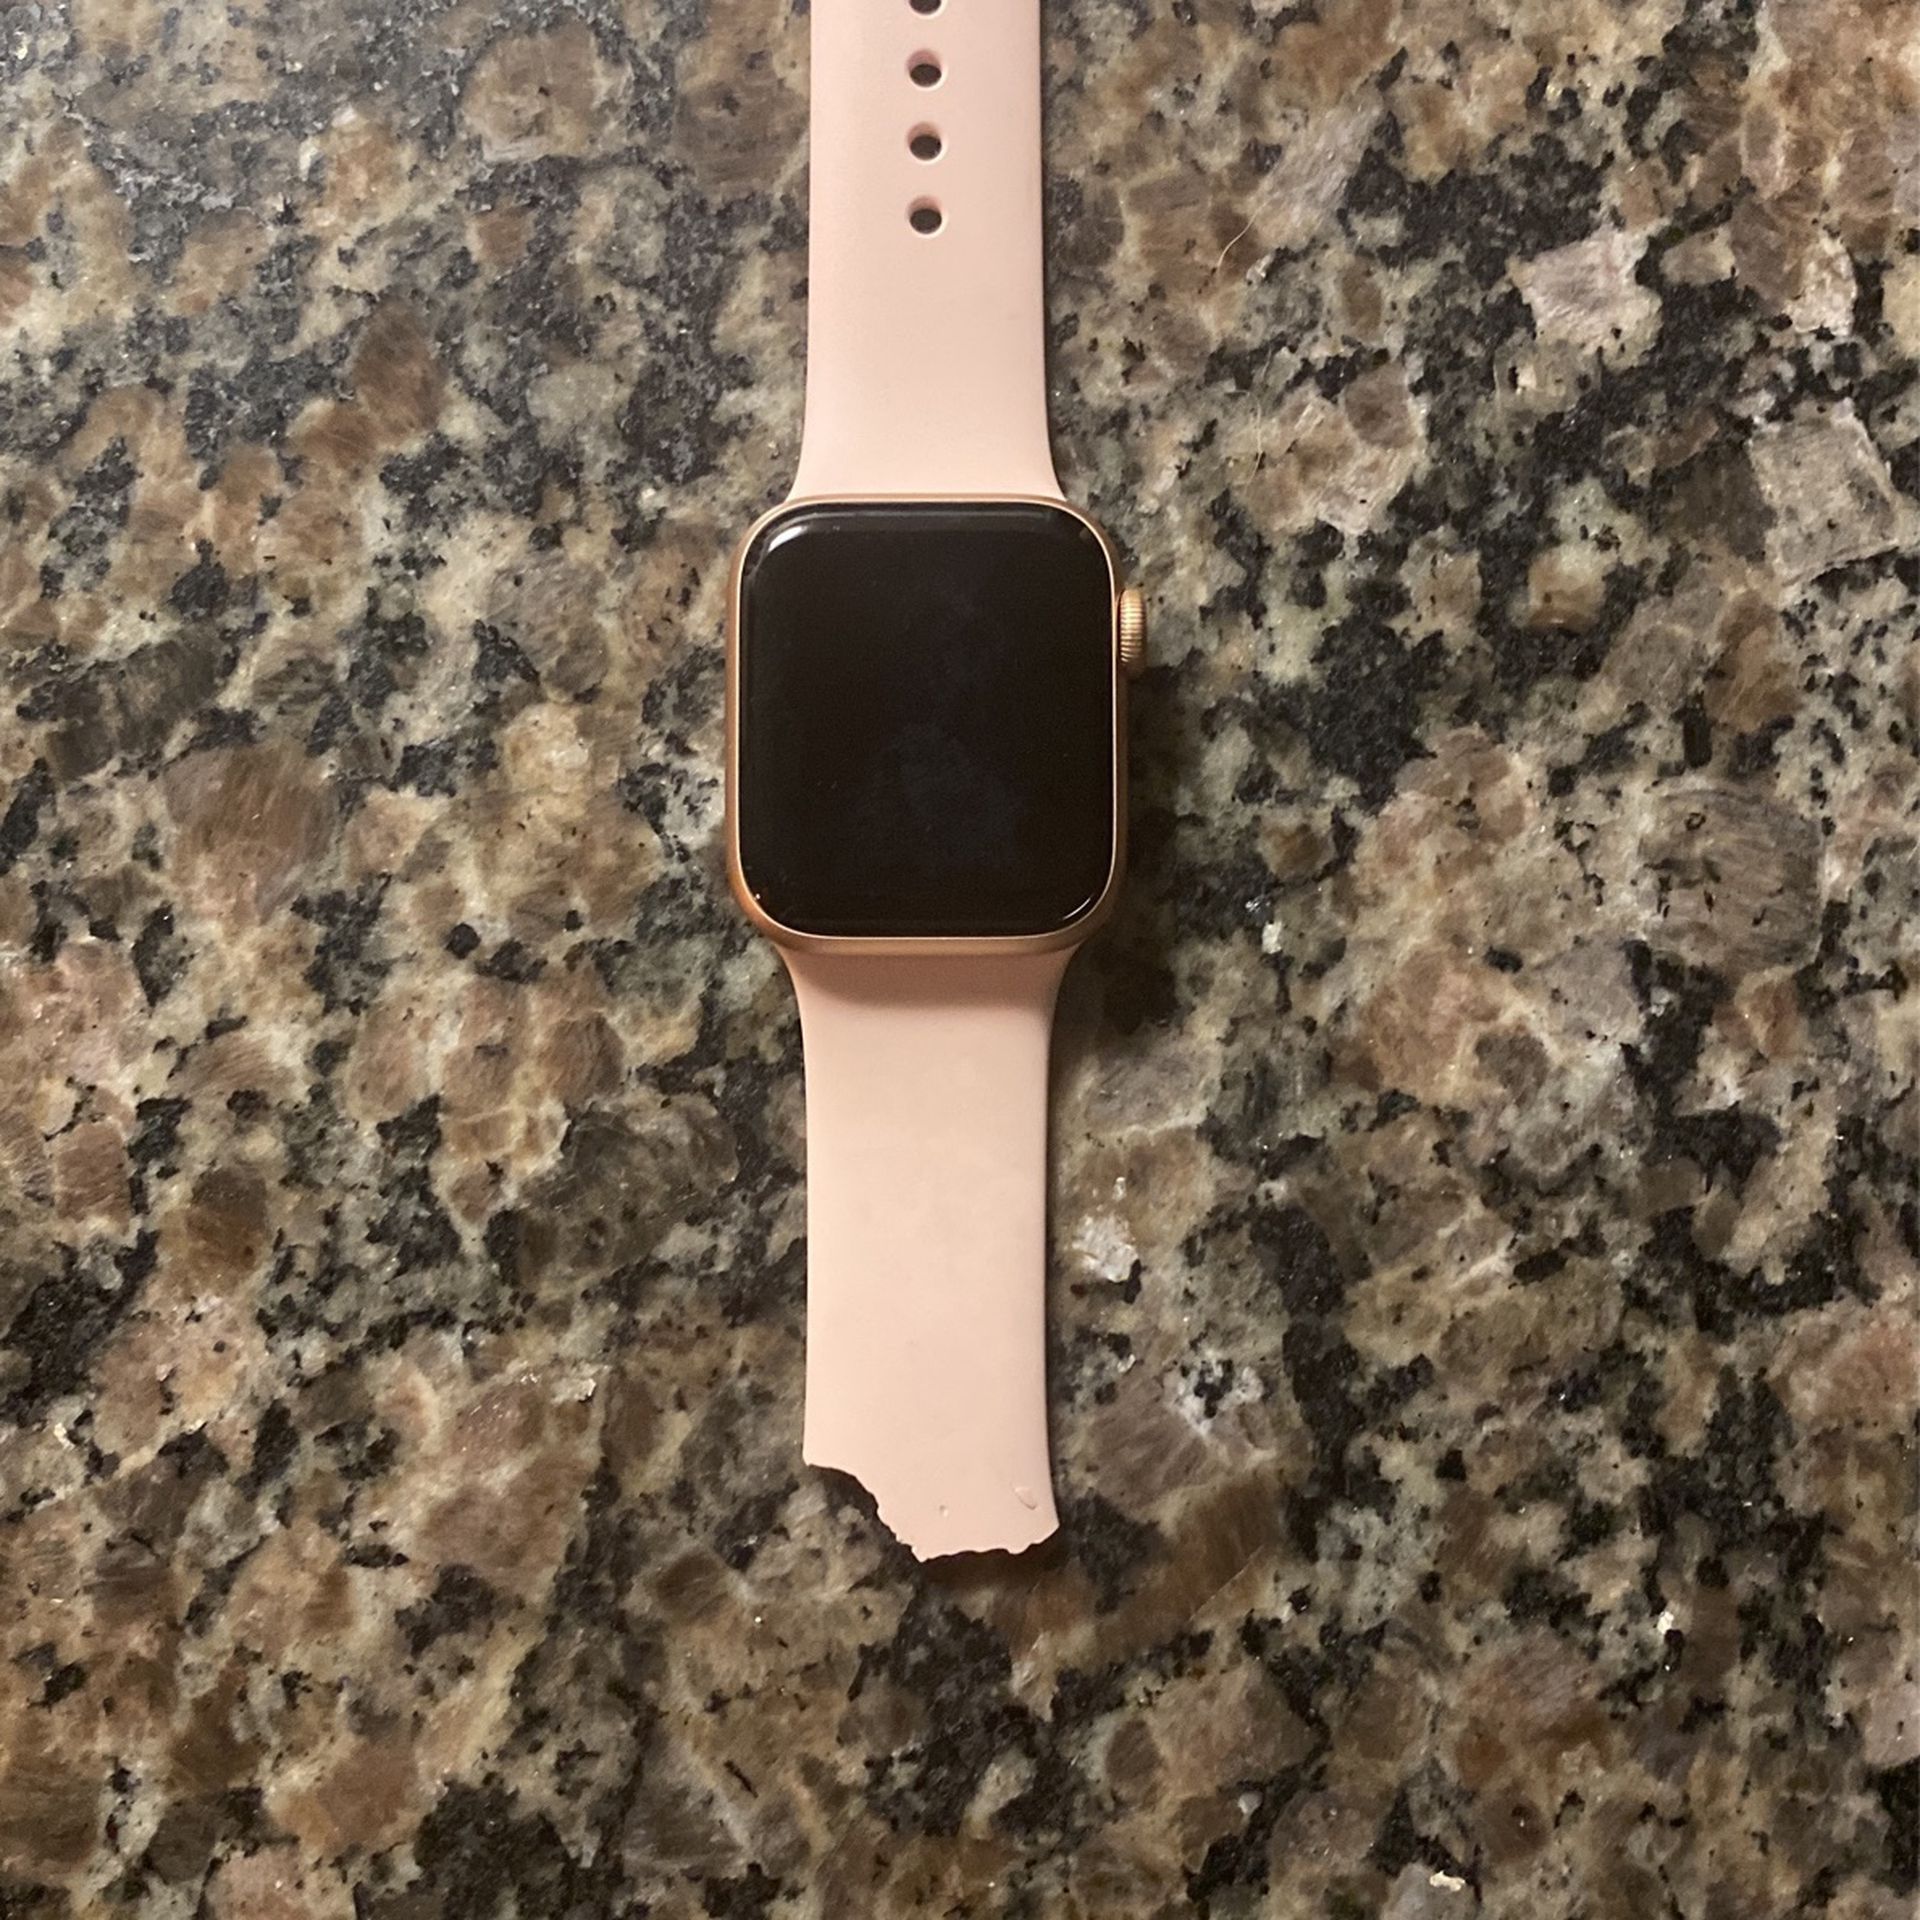 Series 5 Apple Watch Cellular